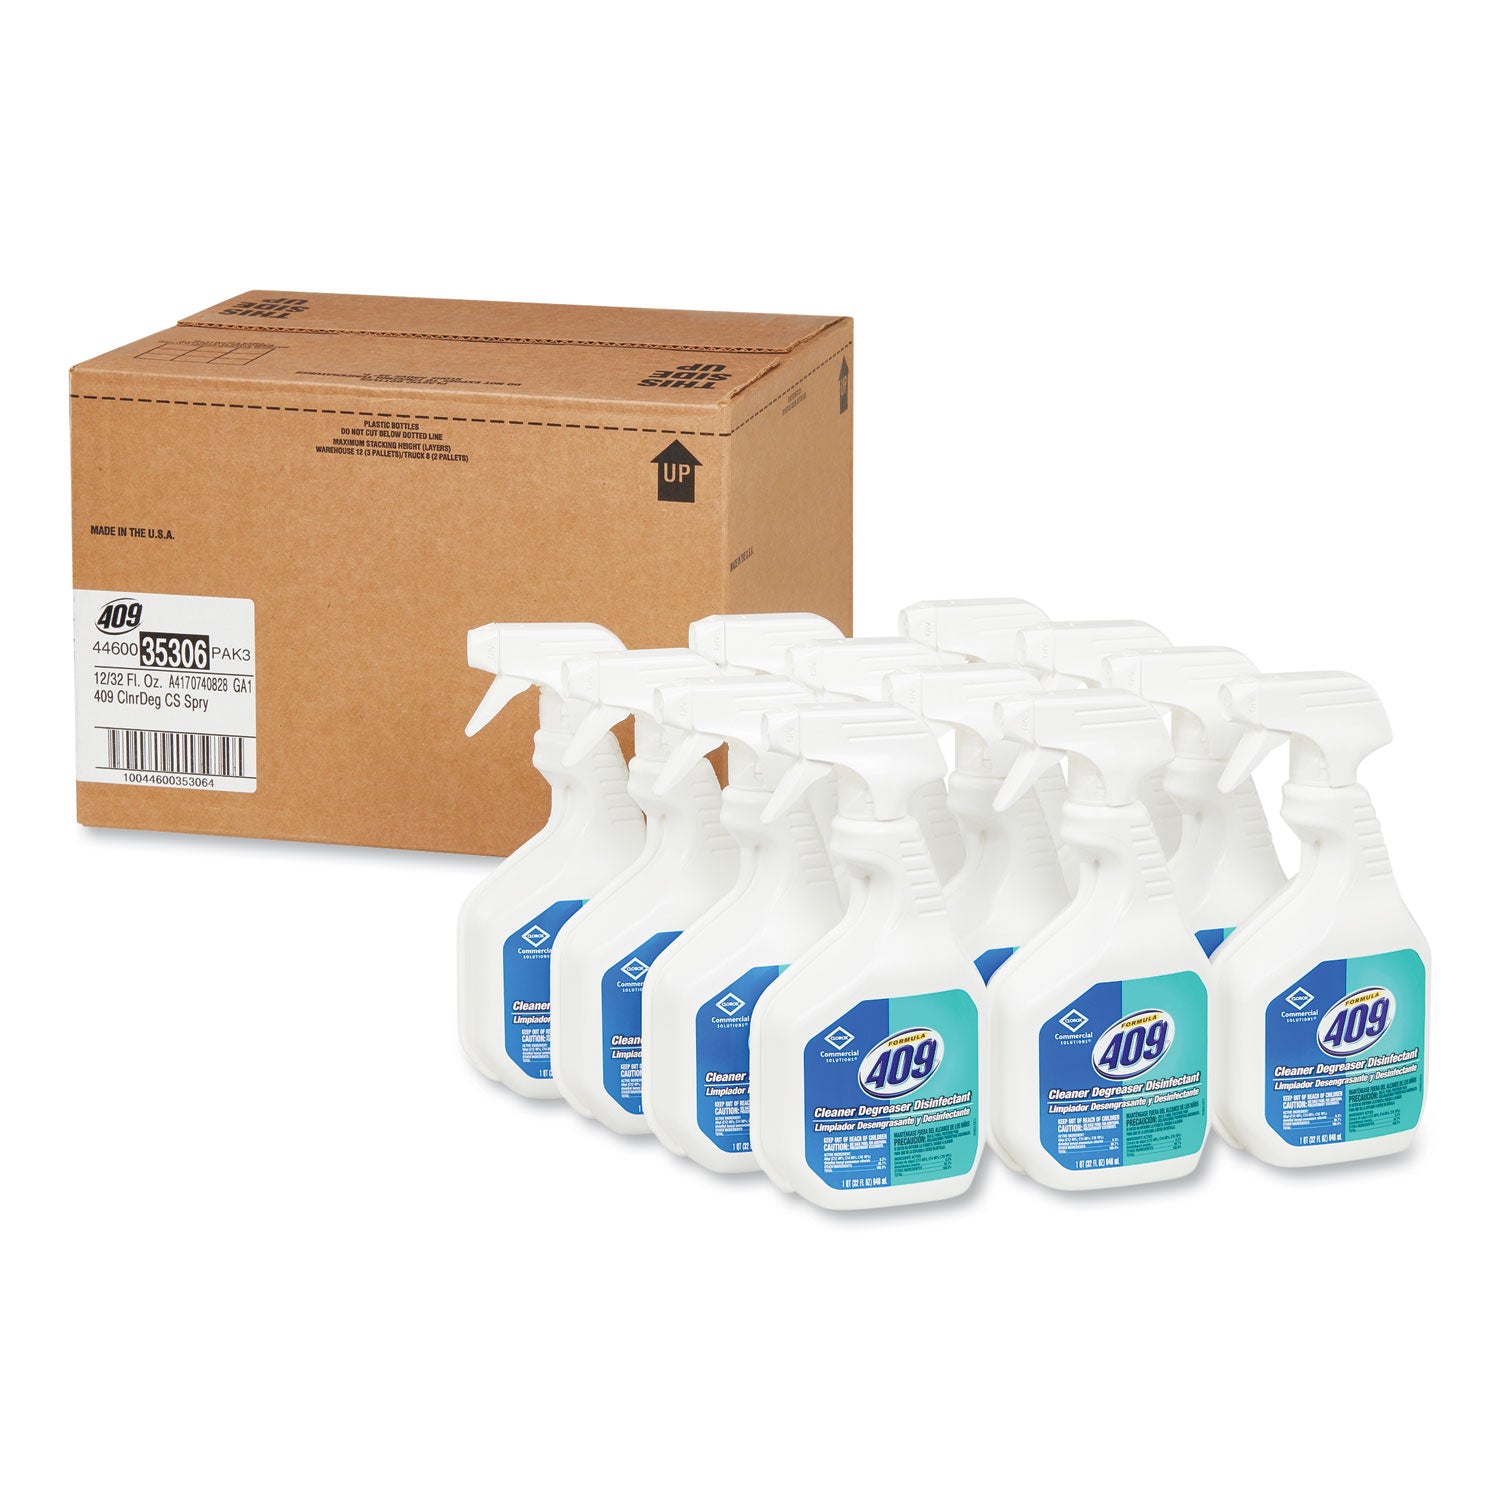 Cleaner Degreaser Disinfectant, 32 oz Spray, 12/Carton - 